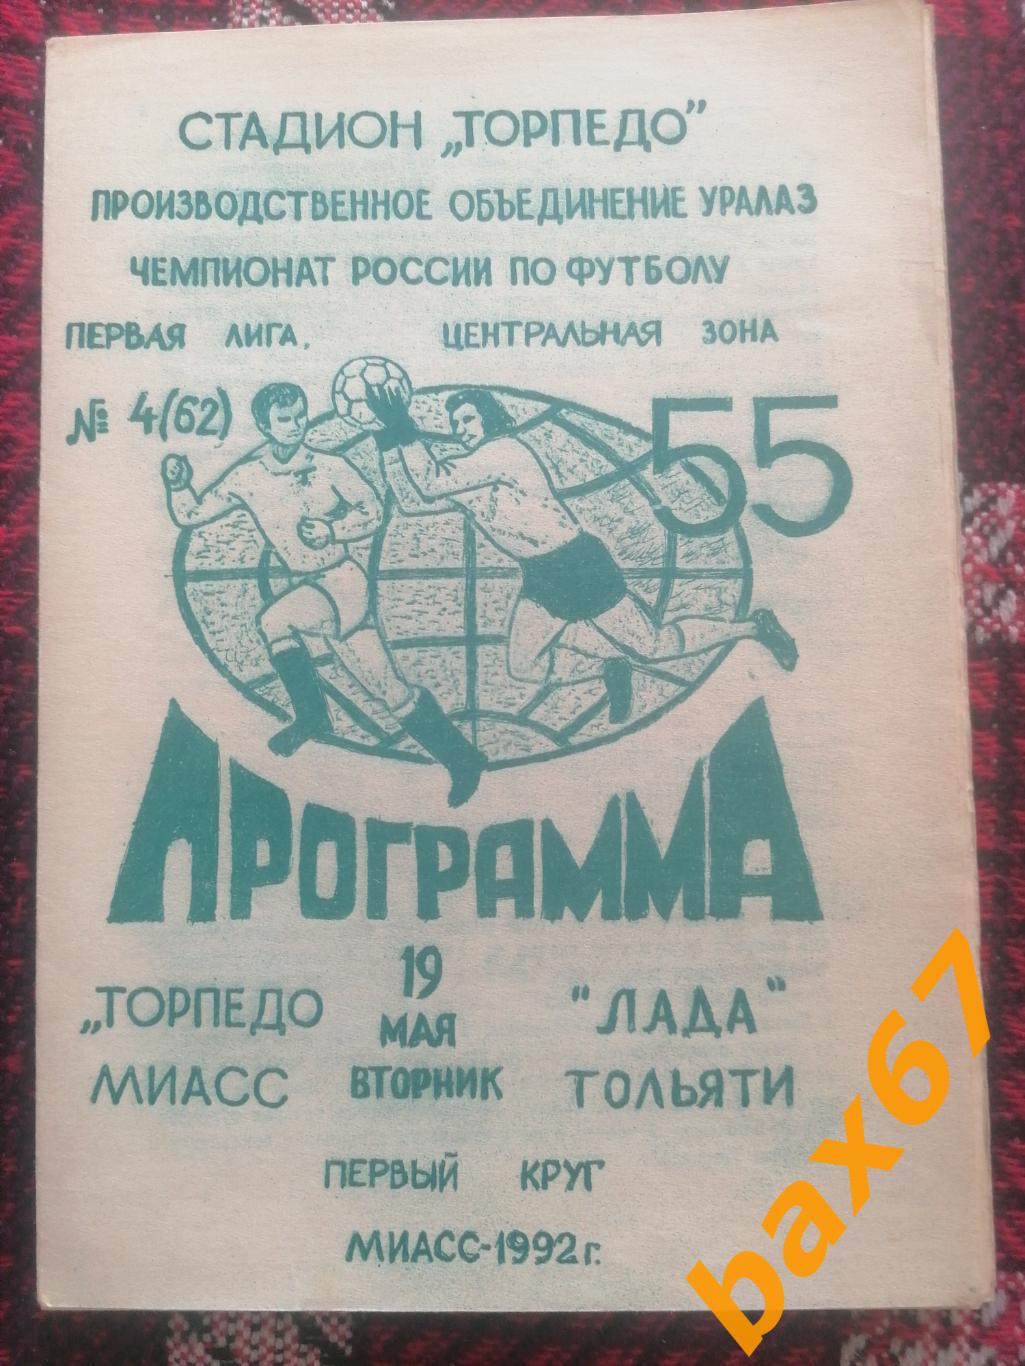 Торпедо Миасс - Лада Тольятти 19.05.1992